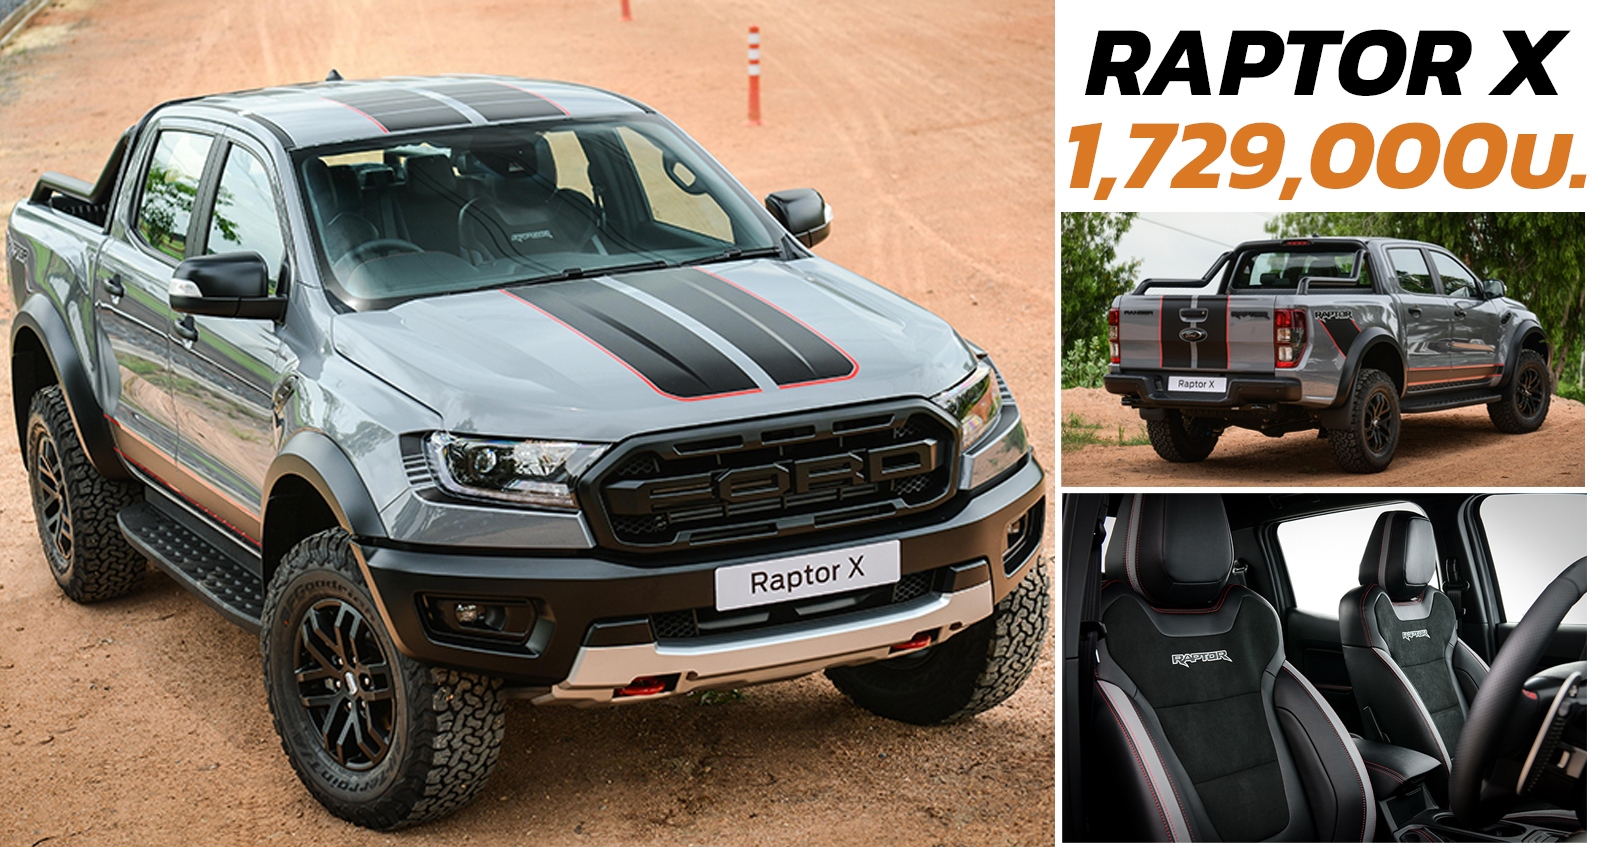 Ford Ranger RAPTOR X ราคา 1,729,000 บาท แต่งพิเศษ ขายไทย